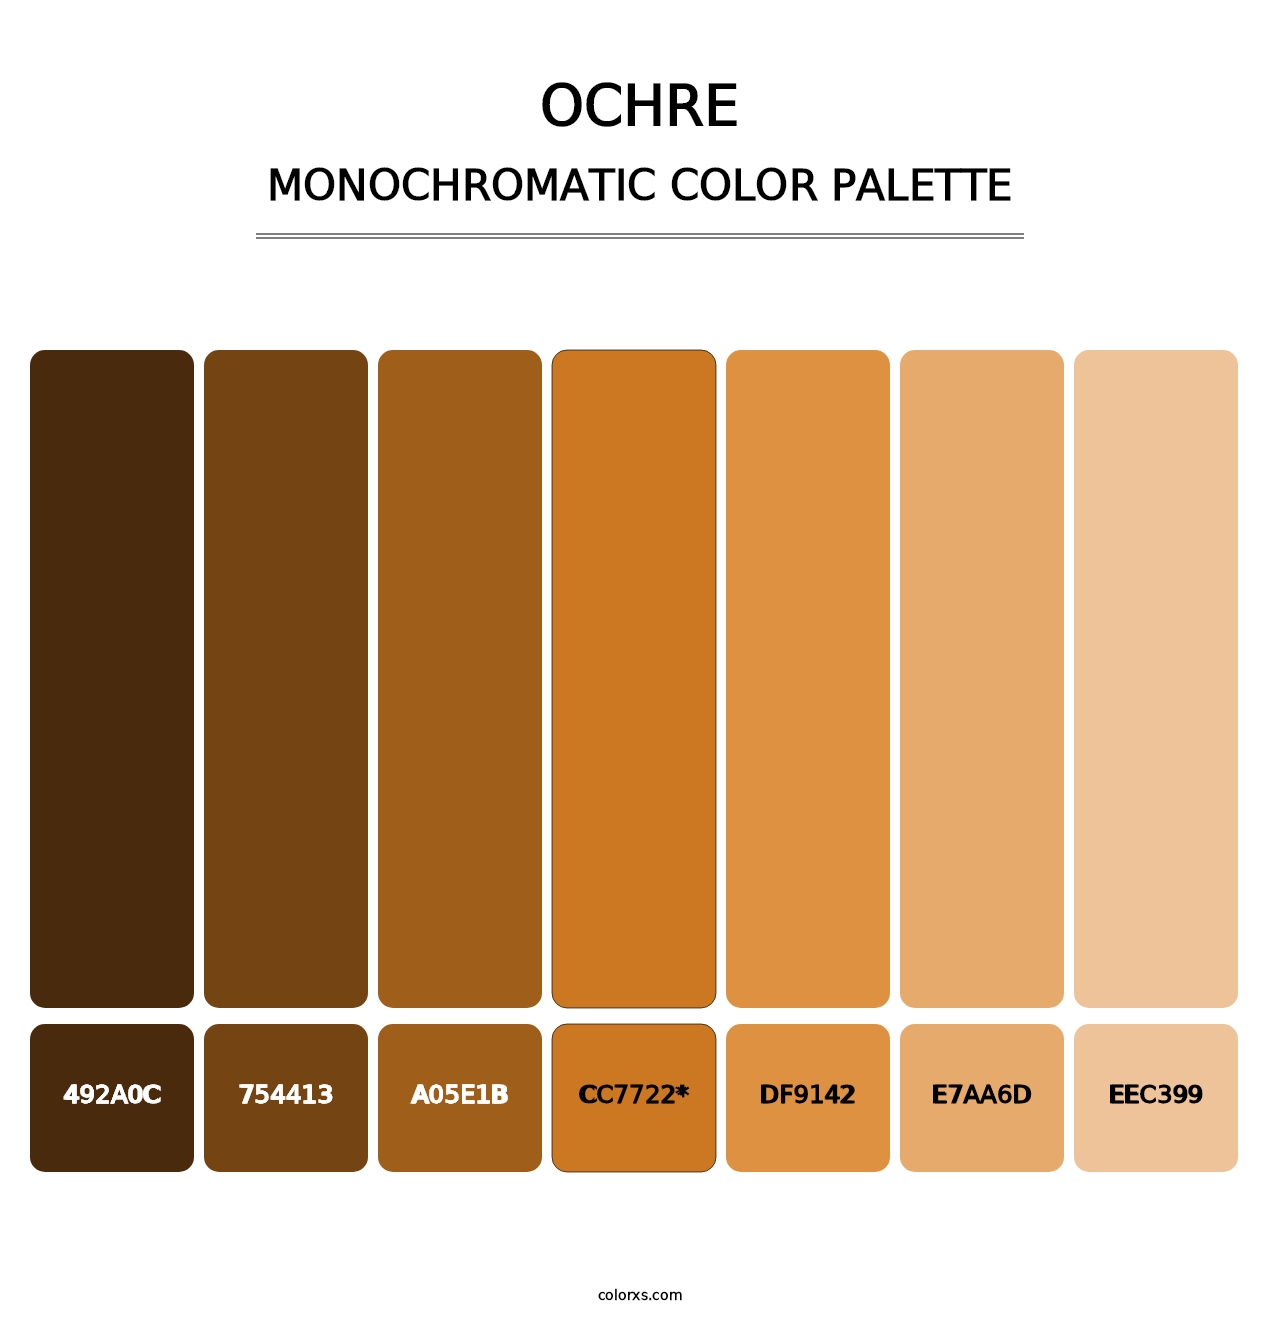 Ochre - Monochromatic Color Palette